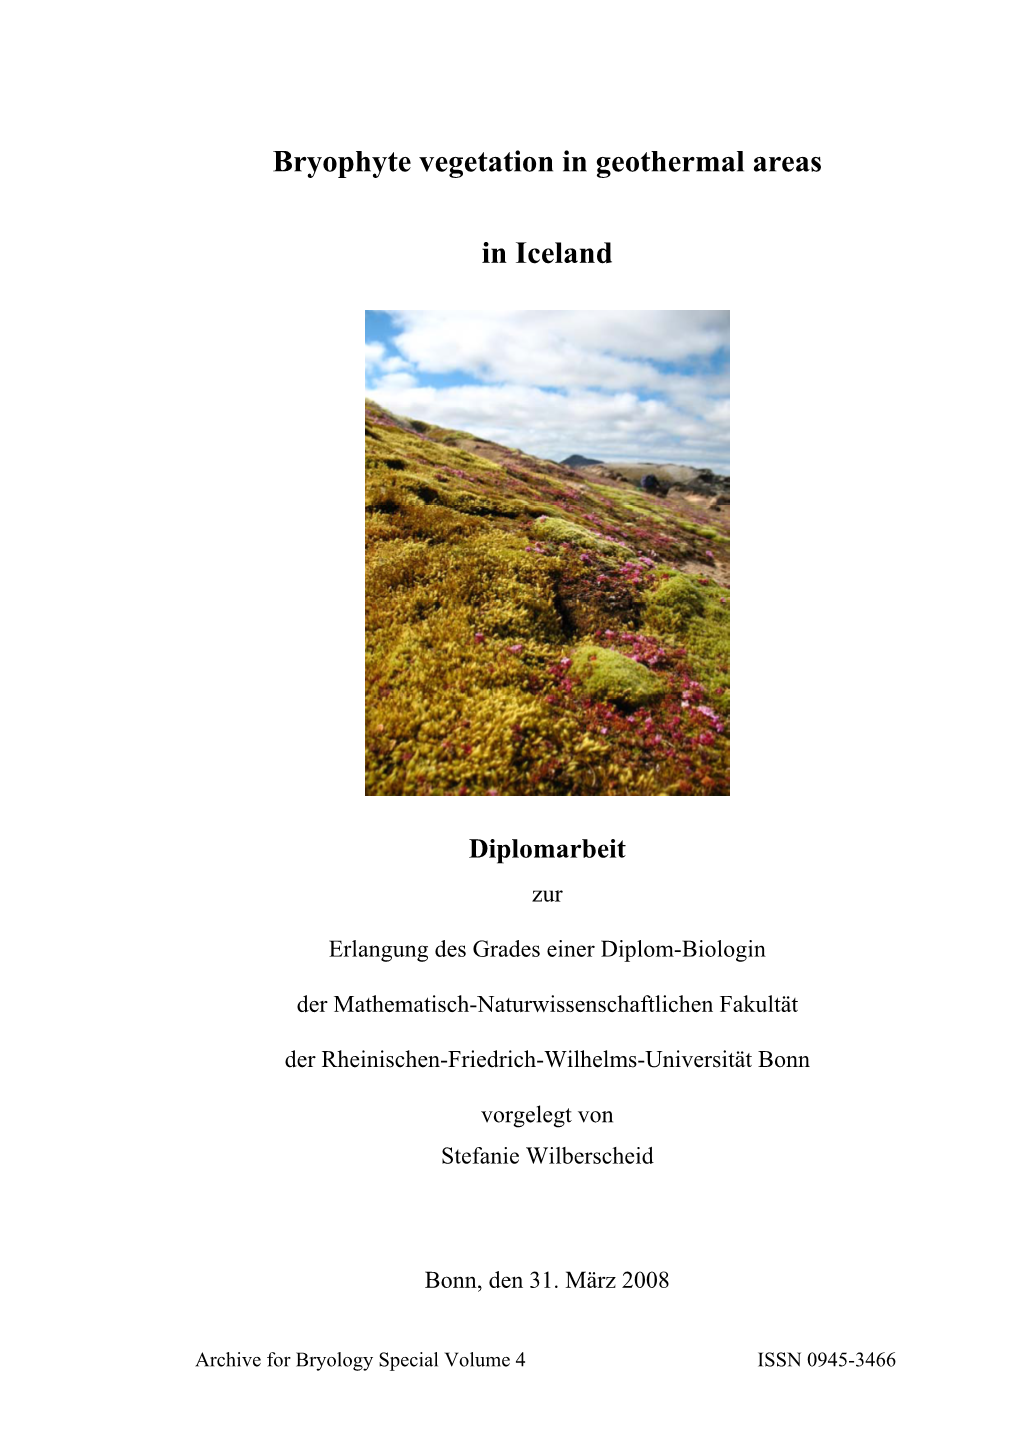 Bryophyte Vegetation in Geothermal Areas in Iceland